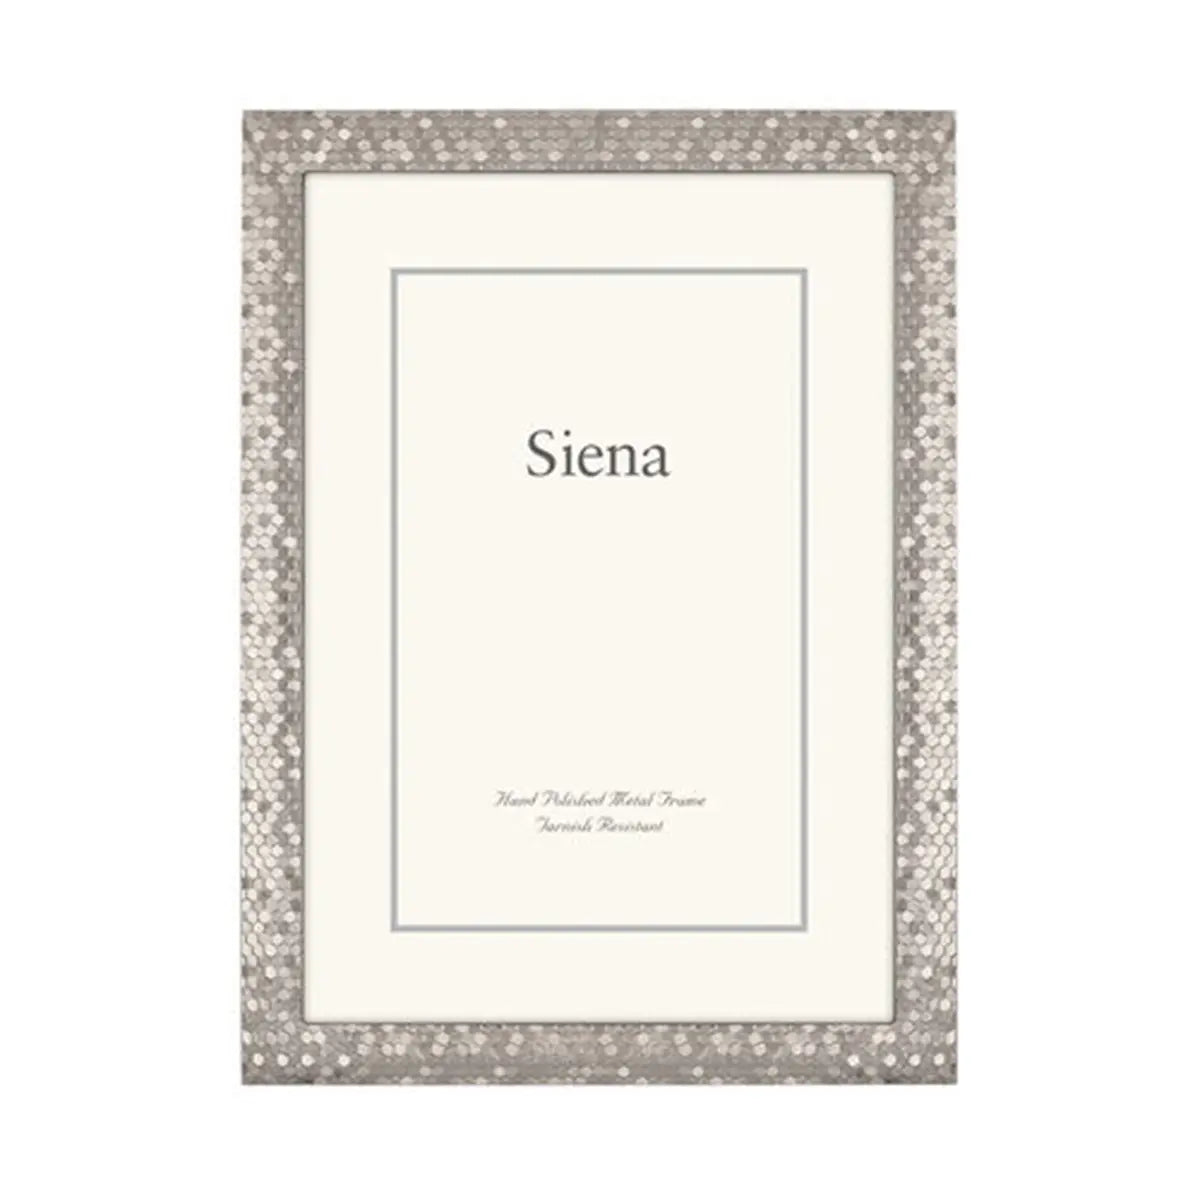 Siena Glitter Silverplate Frame in Silver